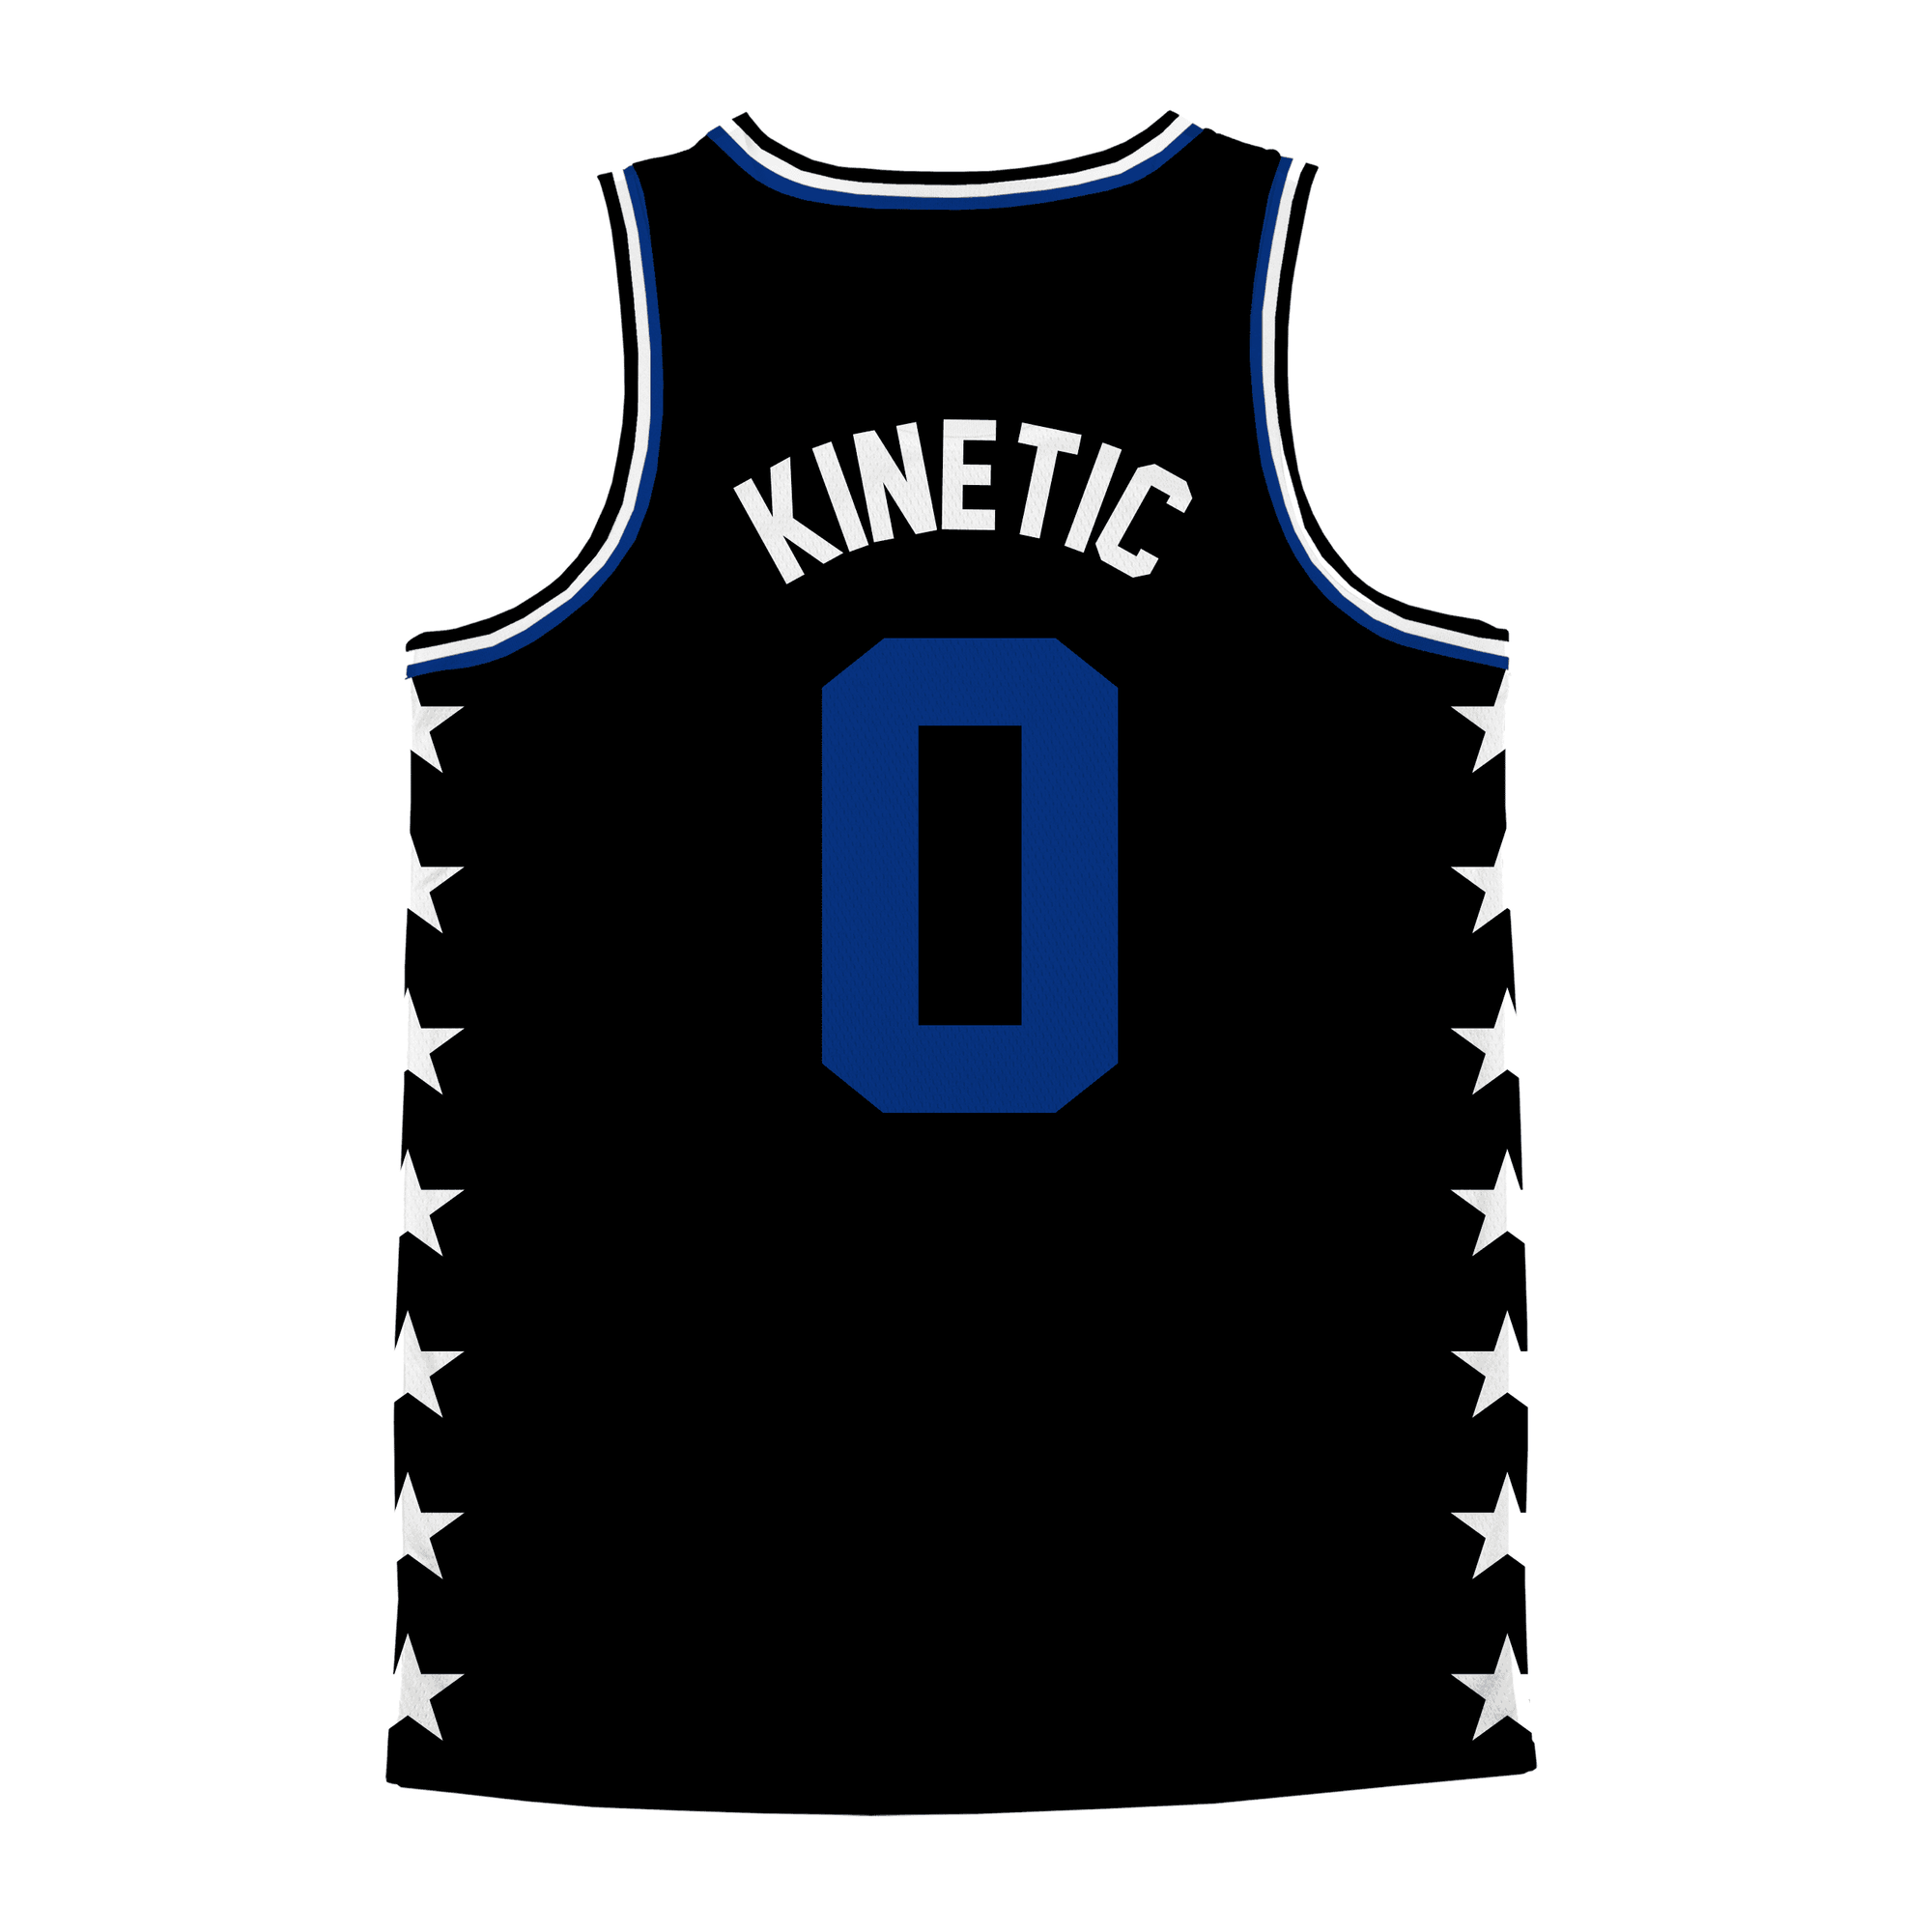 Phi Kappa Psi - Black Star Night Mode Basketball Jersey